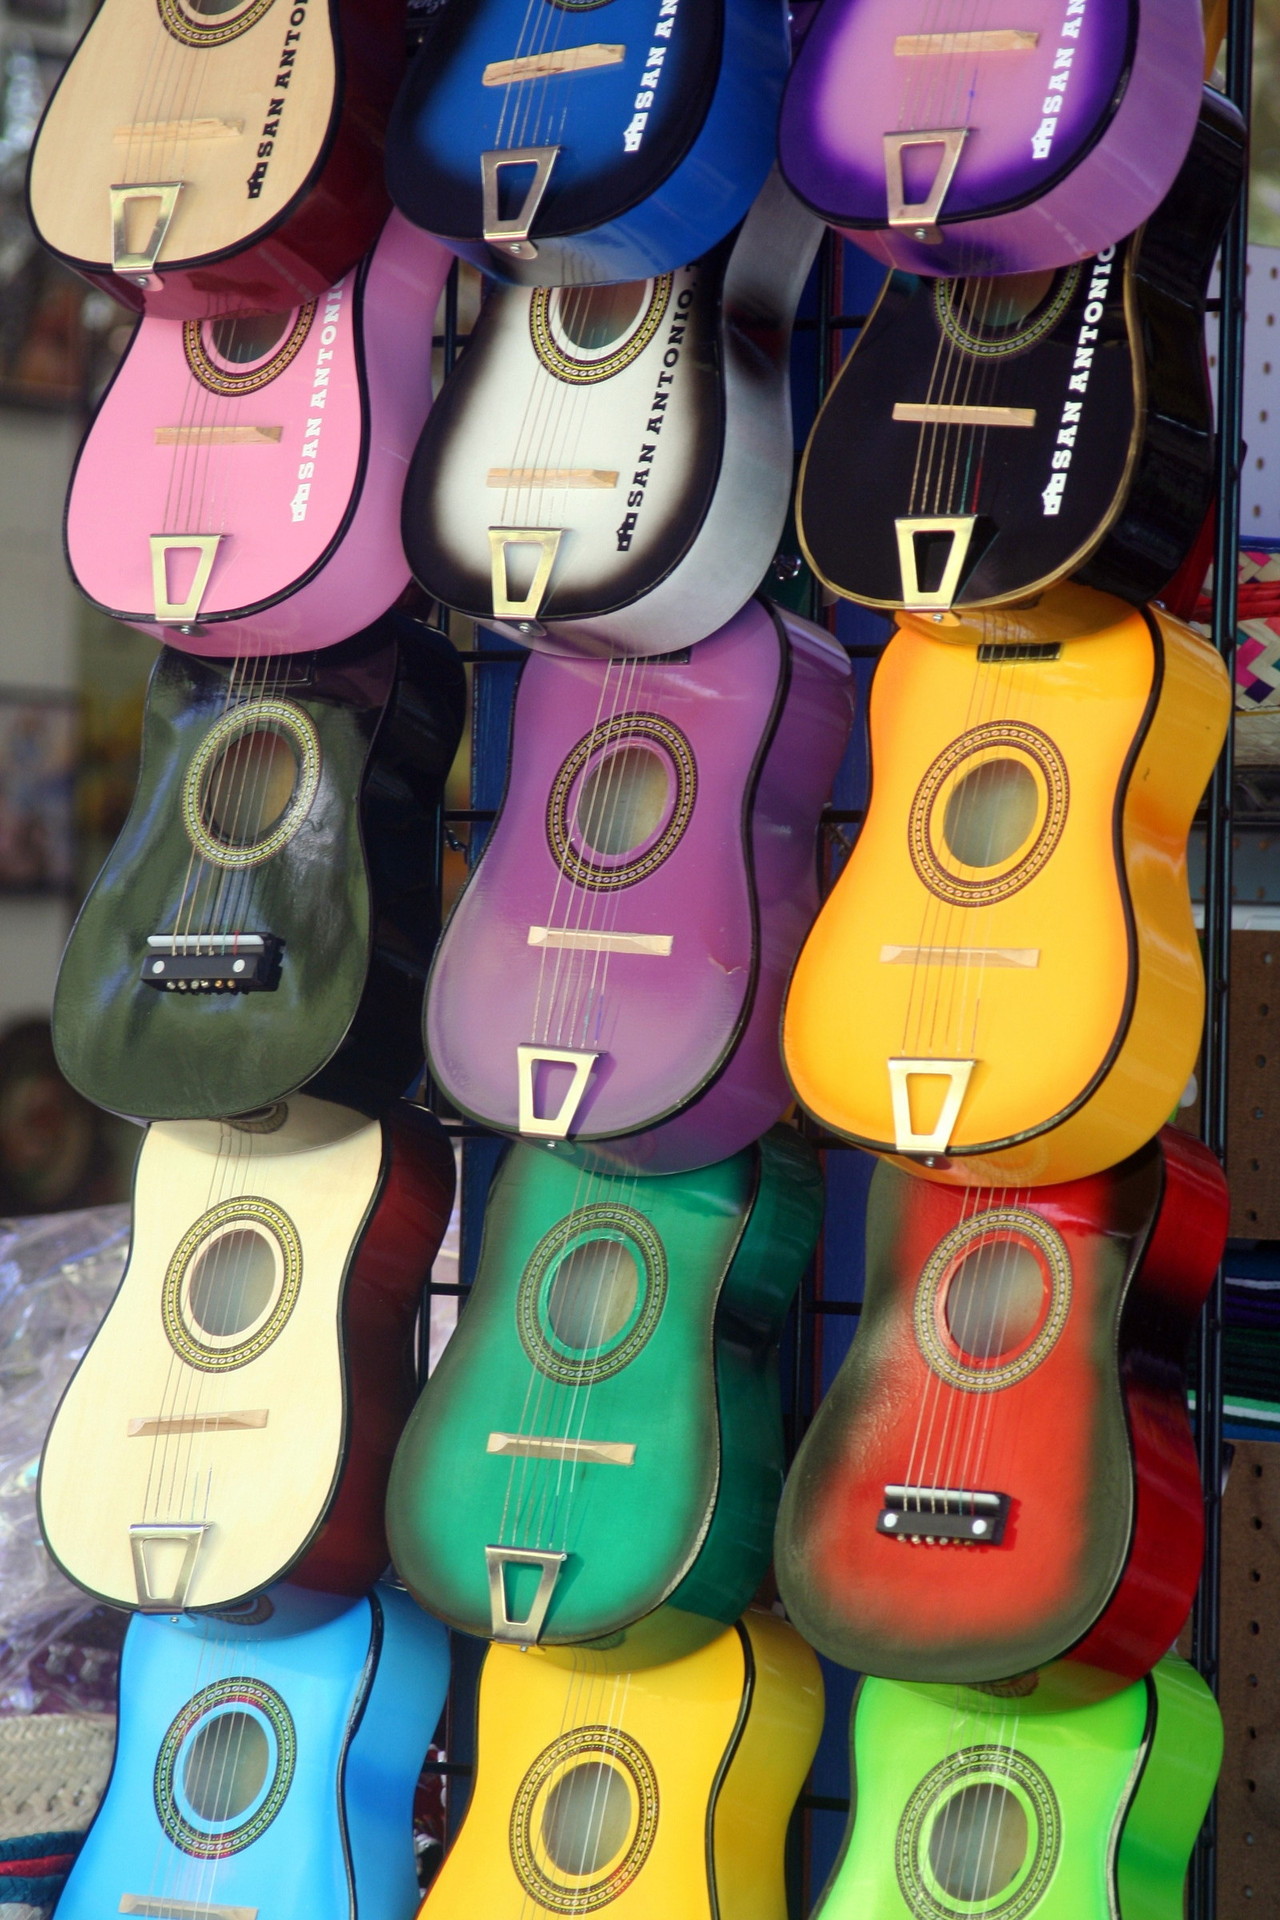 small-colored-guitars-in-san-antonio-mexican-neighboirhood-1412554-1280x1920